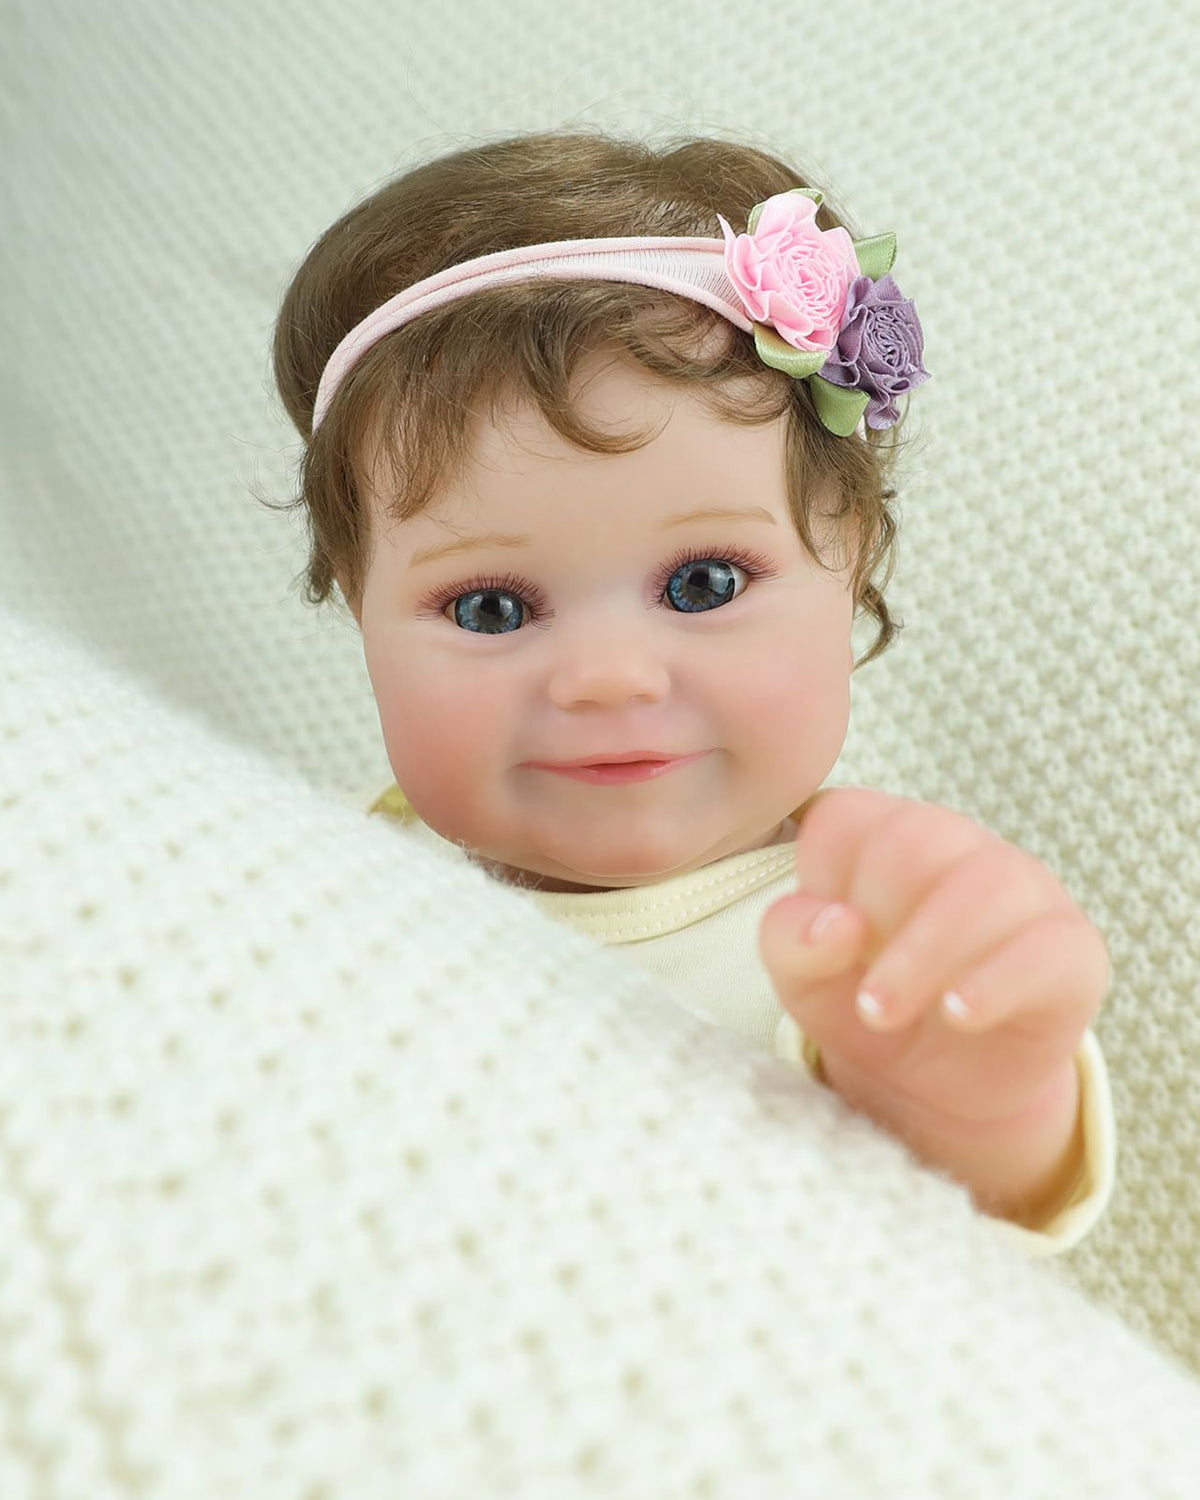 Tasha - 20" Reborn Baby Dolls Look Real Awake Newborn Girl with Hand-rooted Hair